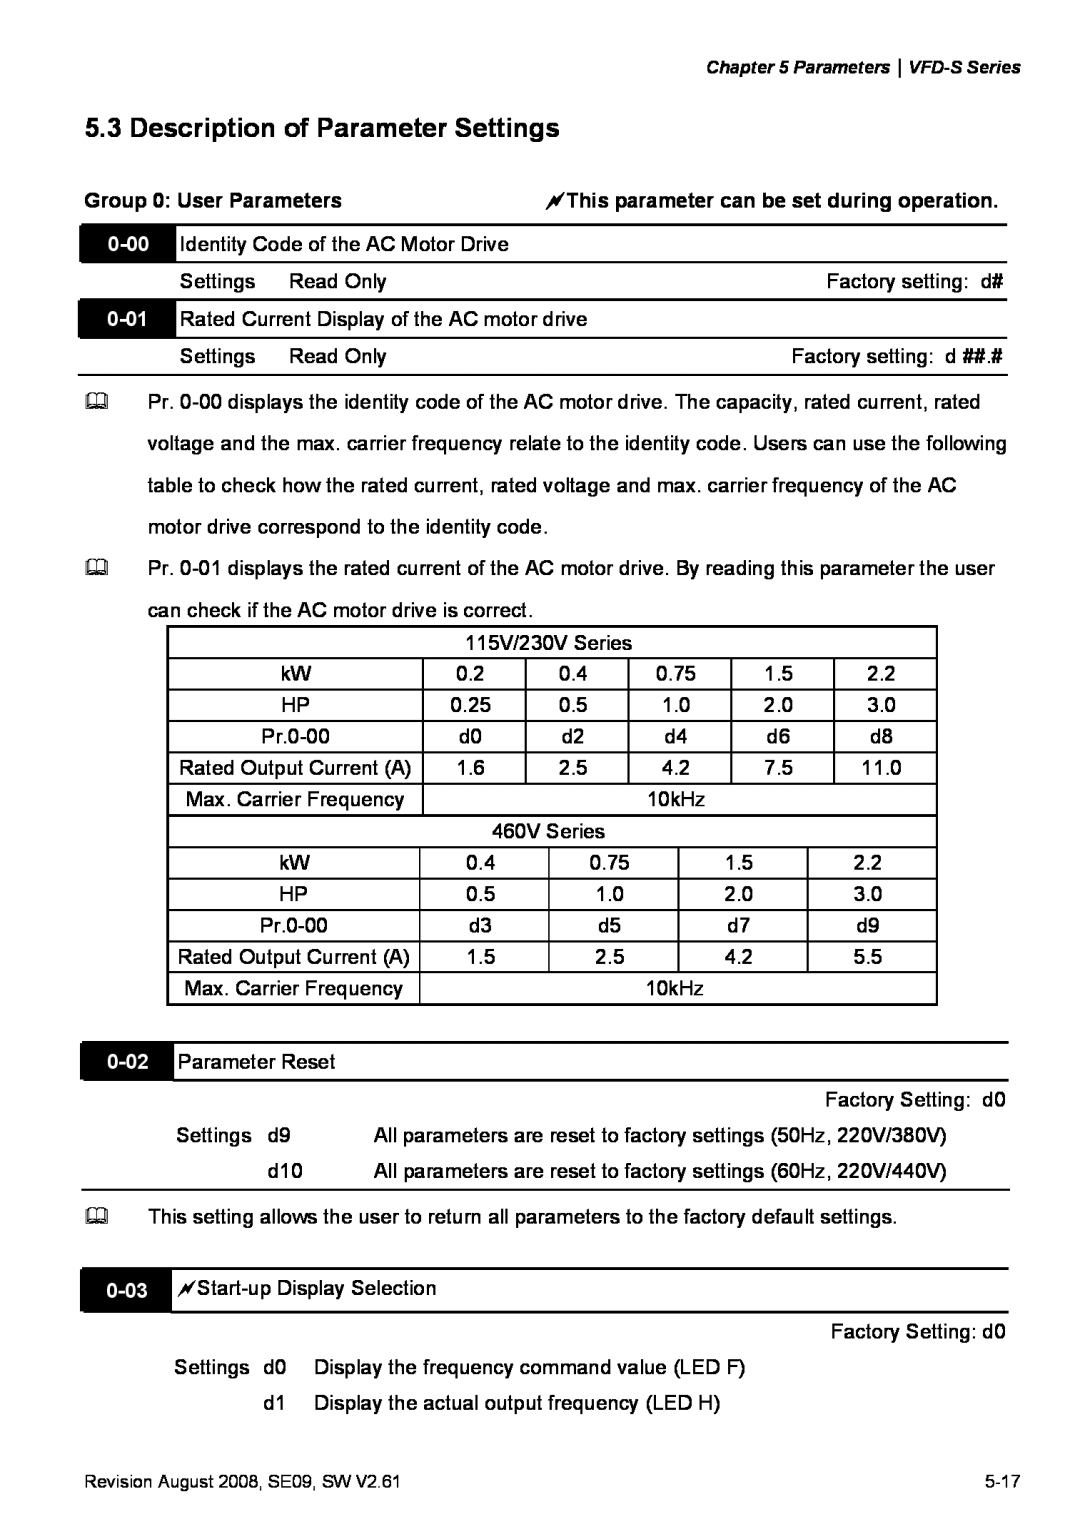 Delta Electronics VFD-S manual Description of Parameter Settings, Group 0 User Parameters, 0-00, 0-01, 0-02 